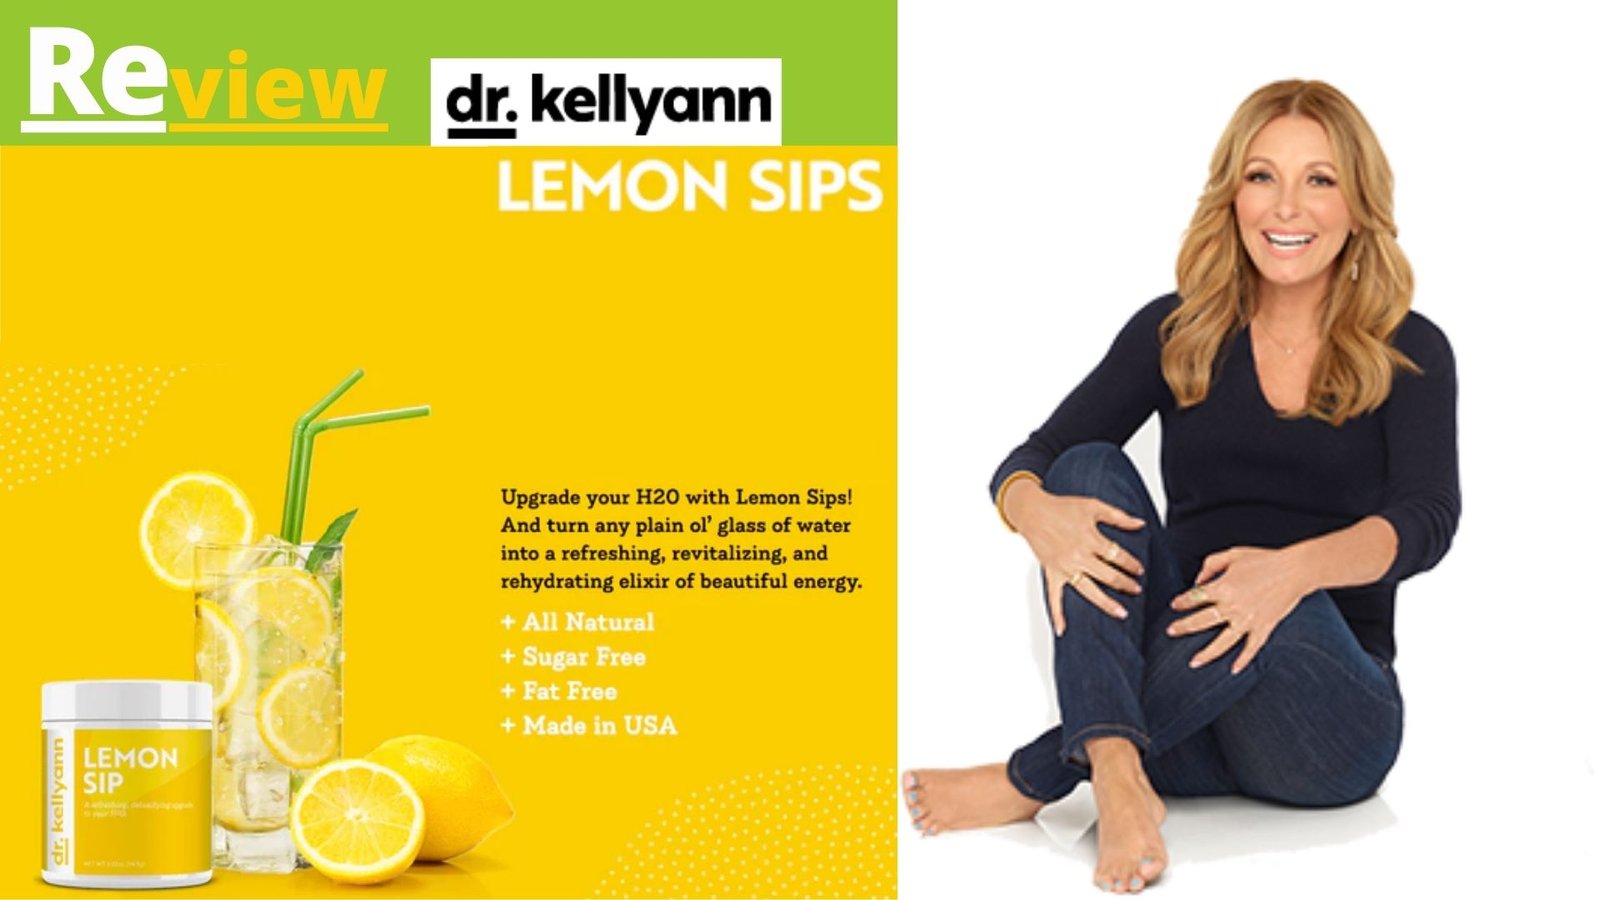 Dr. kellyann Lemon Sips- Review by Techbloginsider